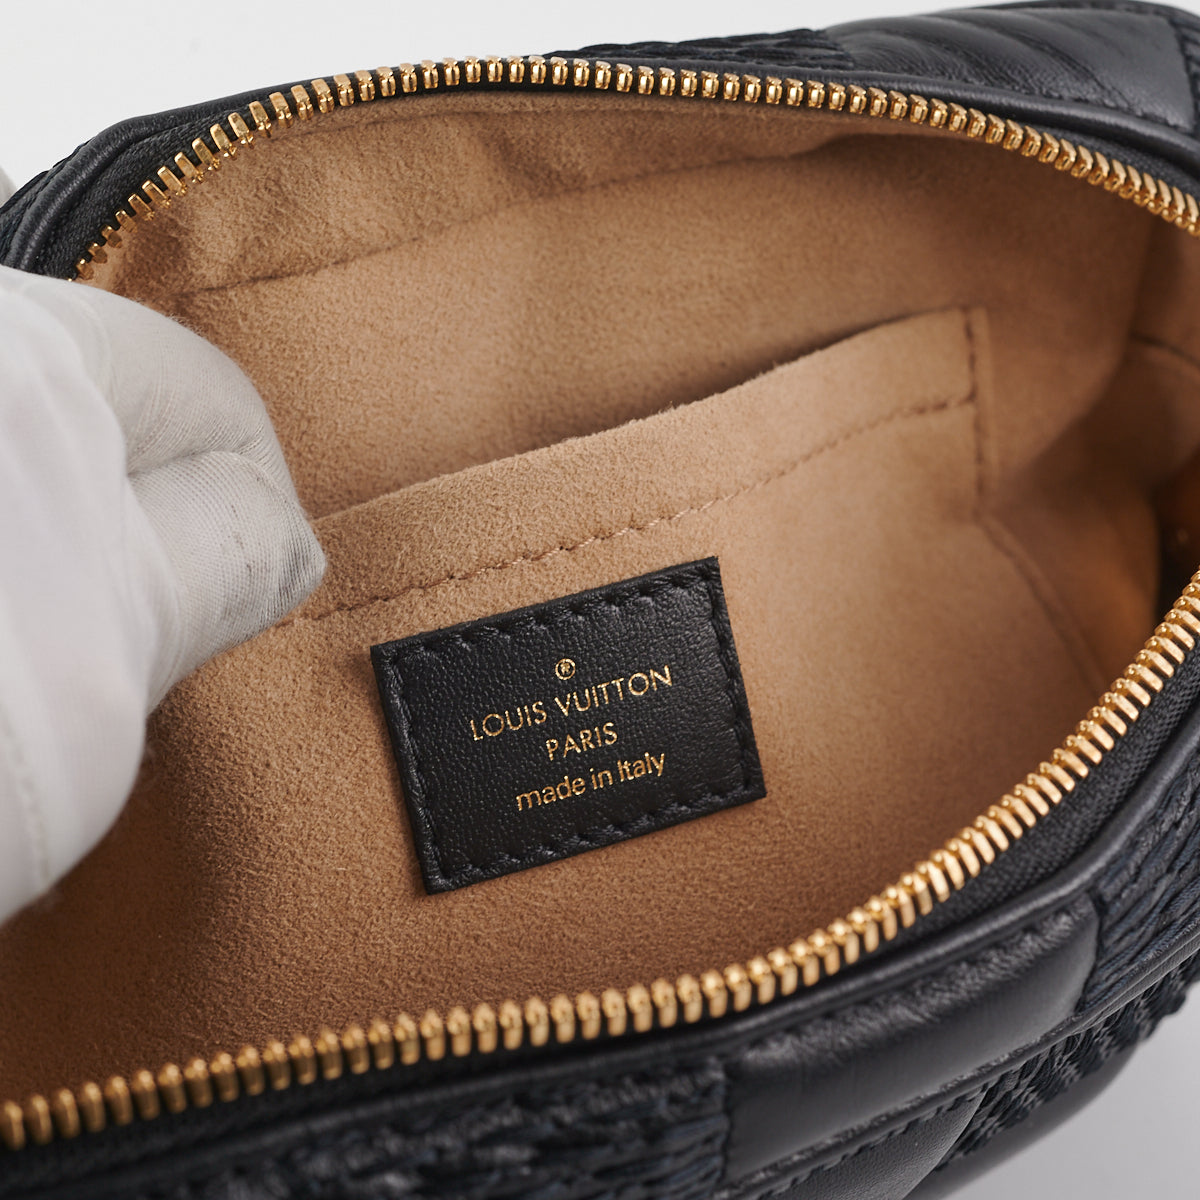 Shop Louis Vuitton Troca Mm (M59114) by CATSUSELECT